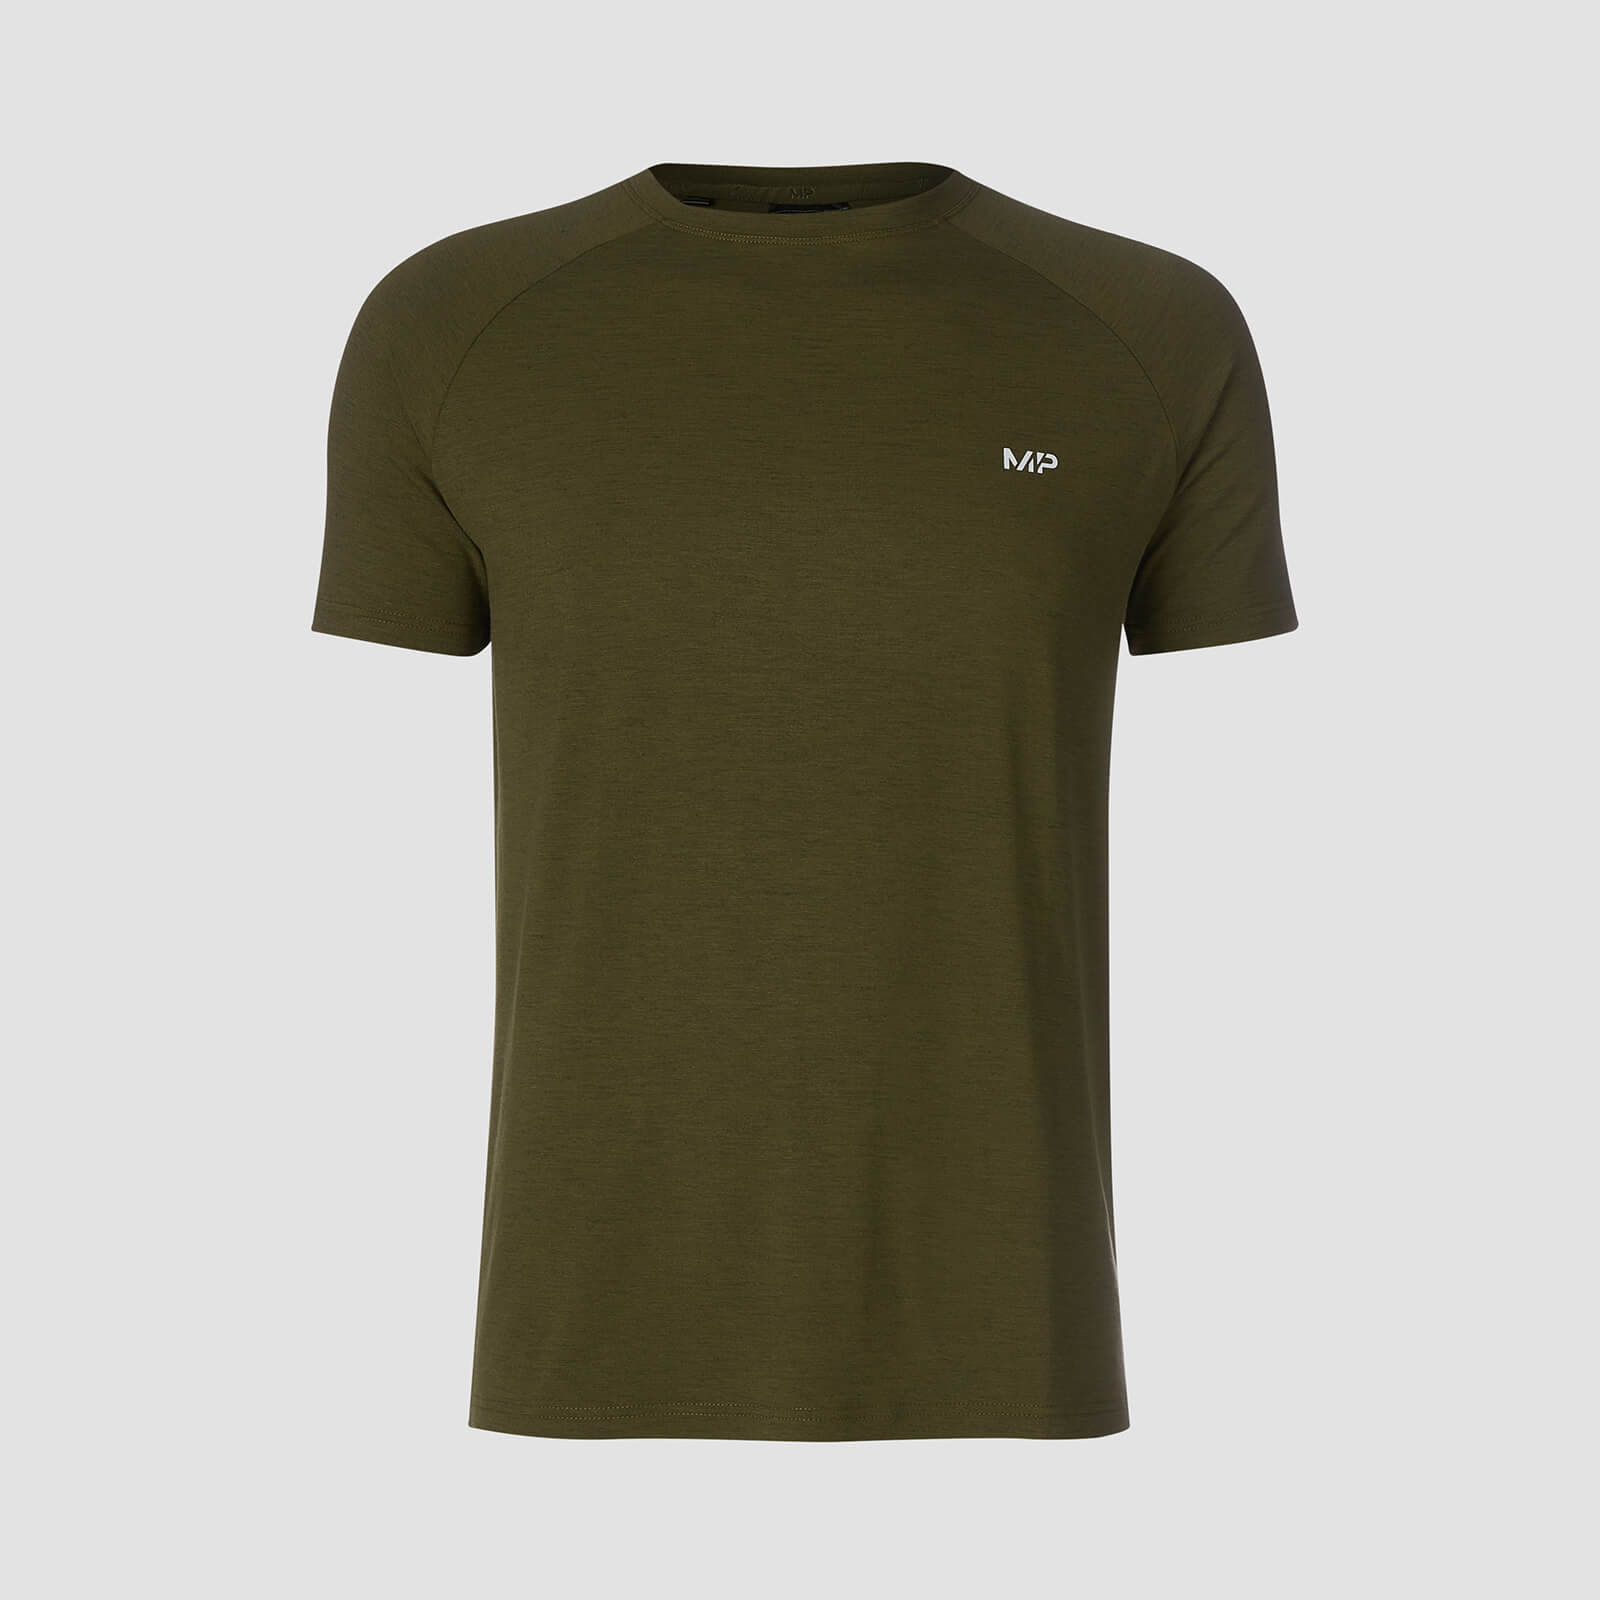 Myprotein T-shirt Performance Short Sleeve MP - Verde militare/Nero - L